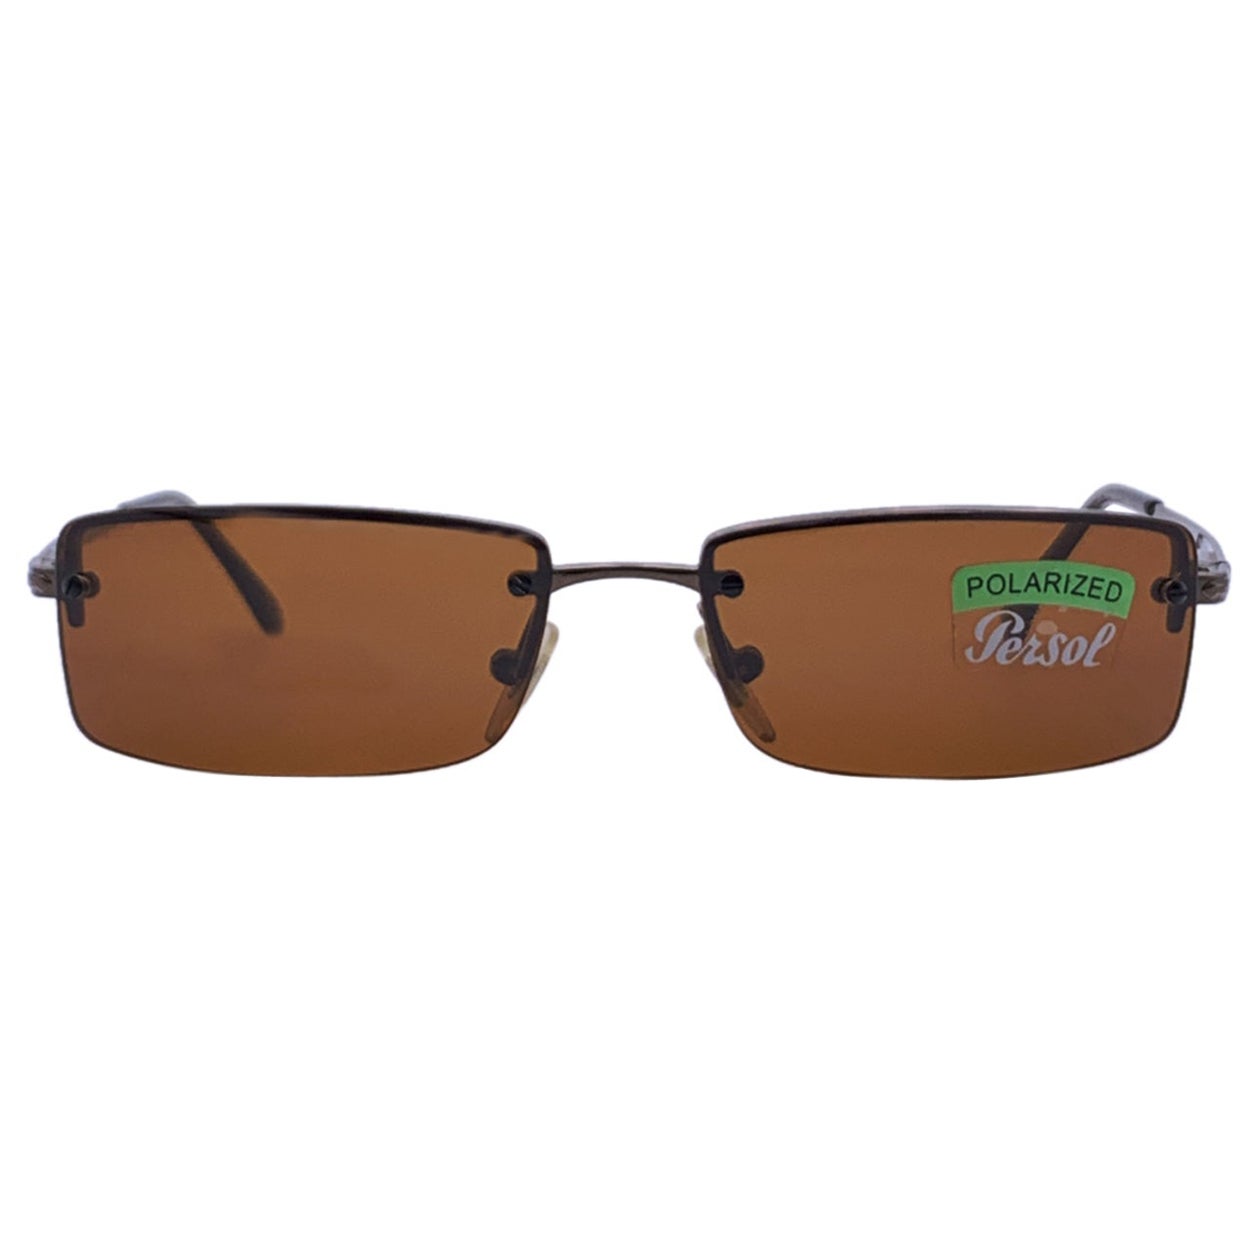 Persol Brown Rimless Sunglasses 2193-S Polarized 55/15 135 mm